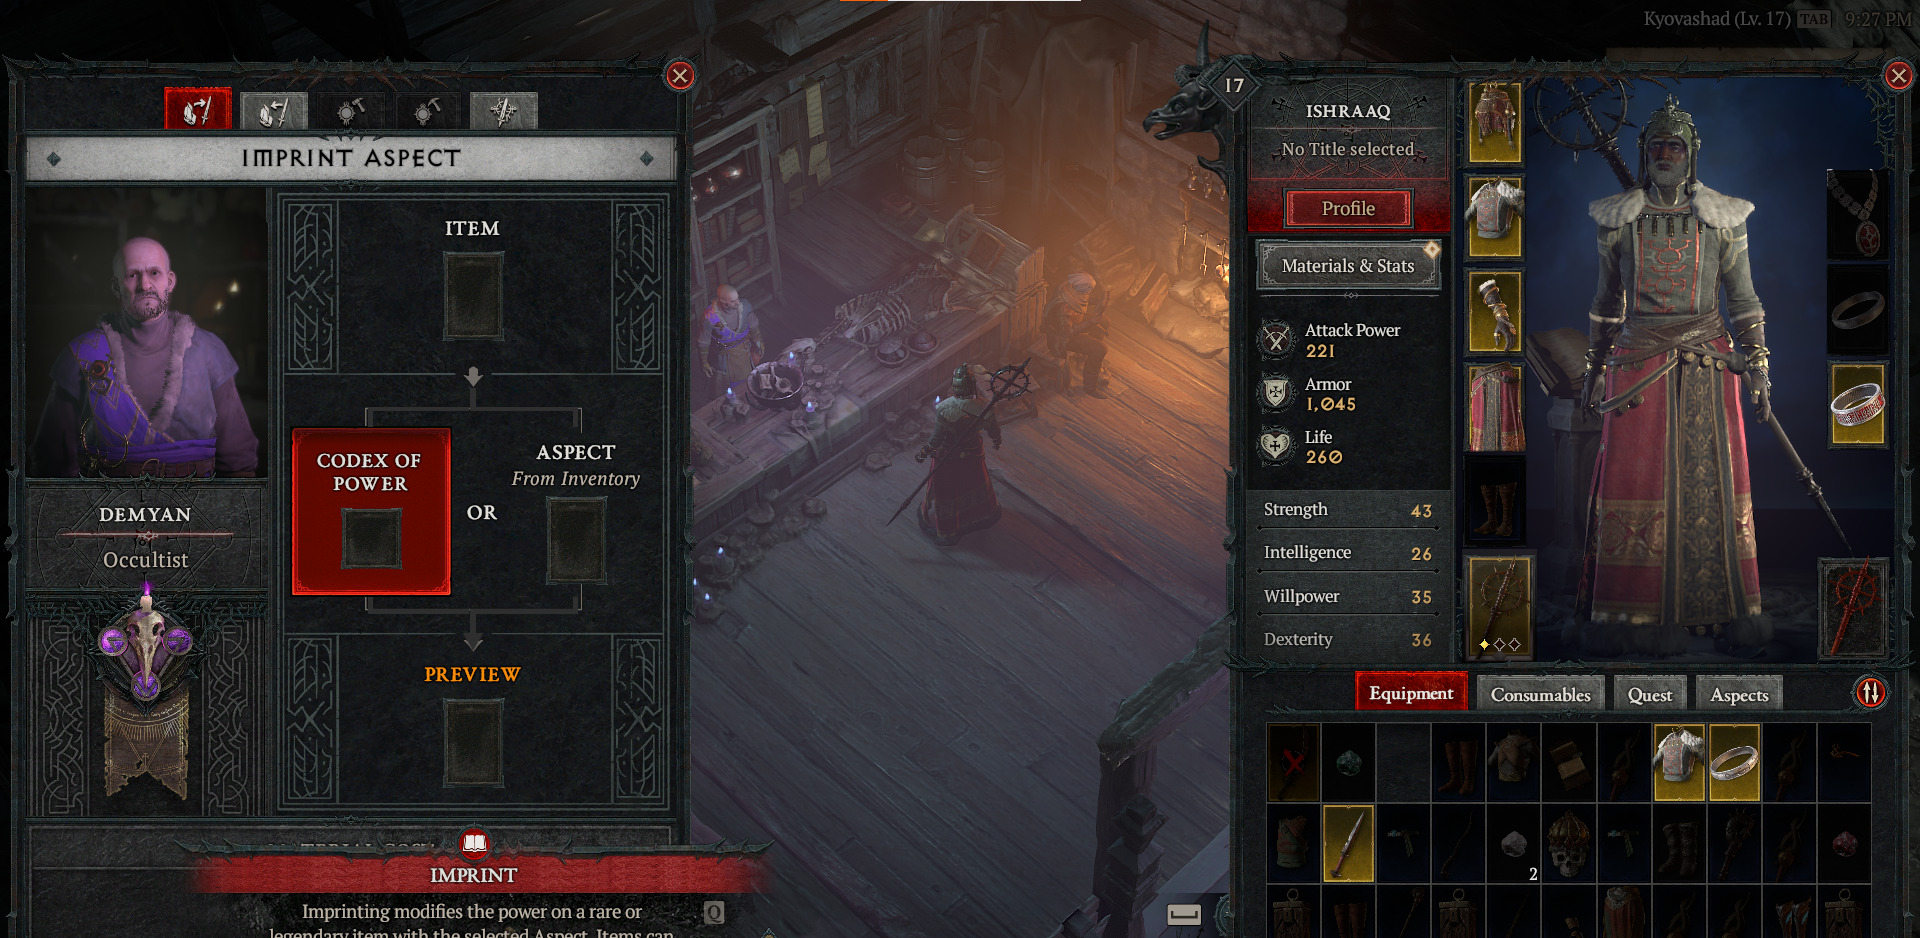 A screenshot showing the Imprint Aspect screen in Diablo 4